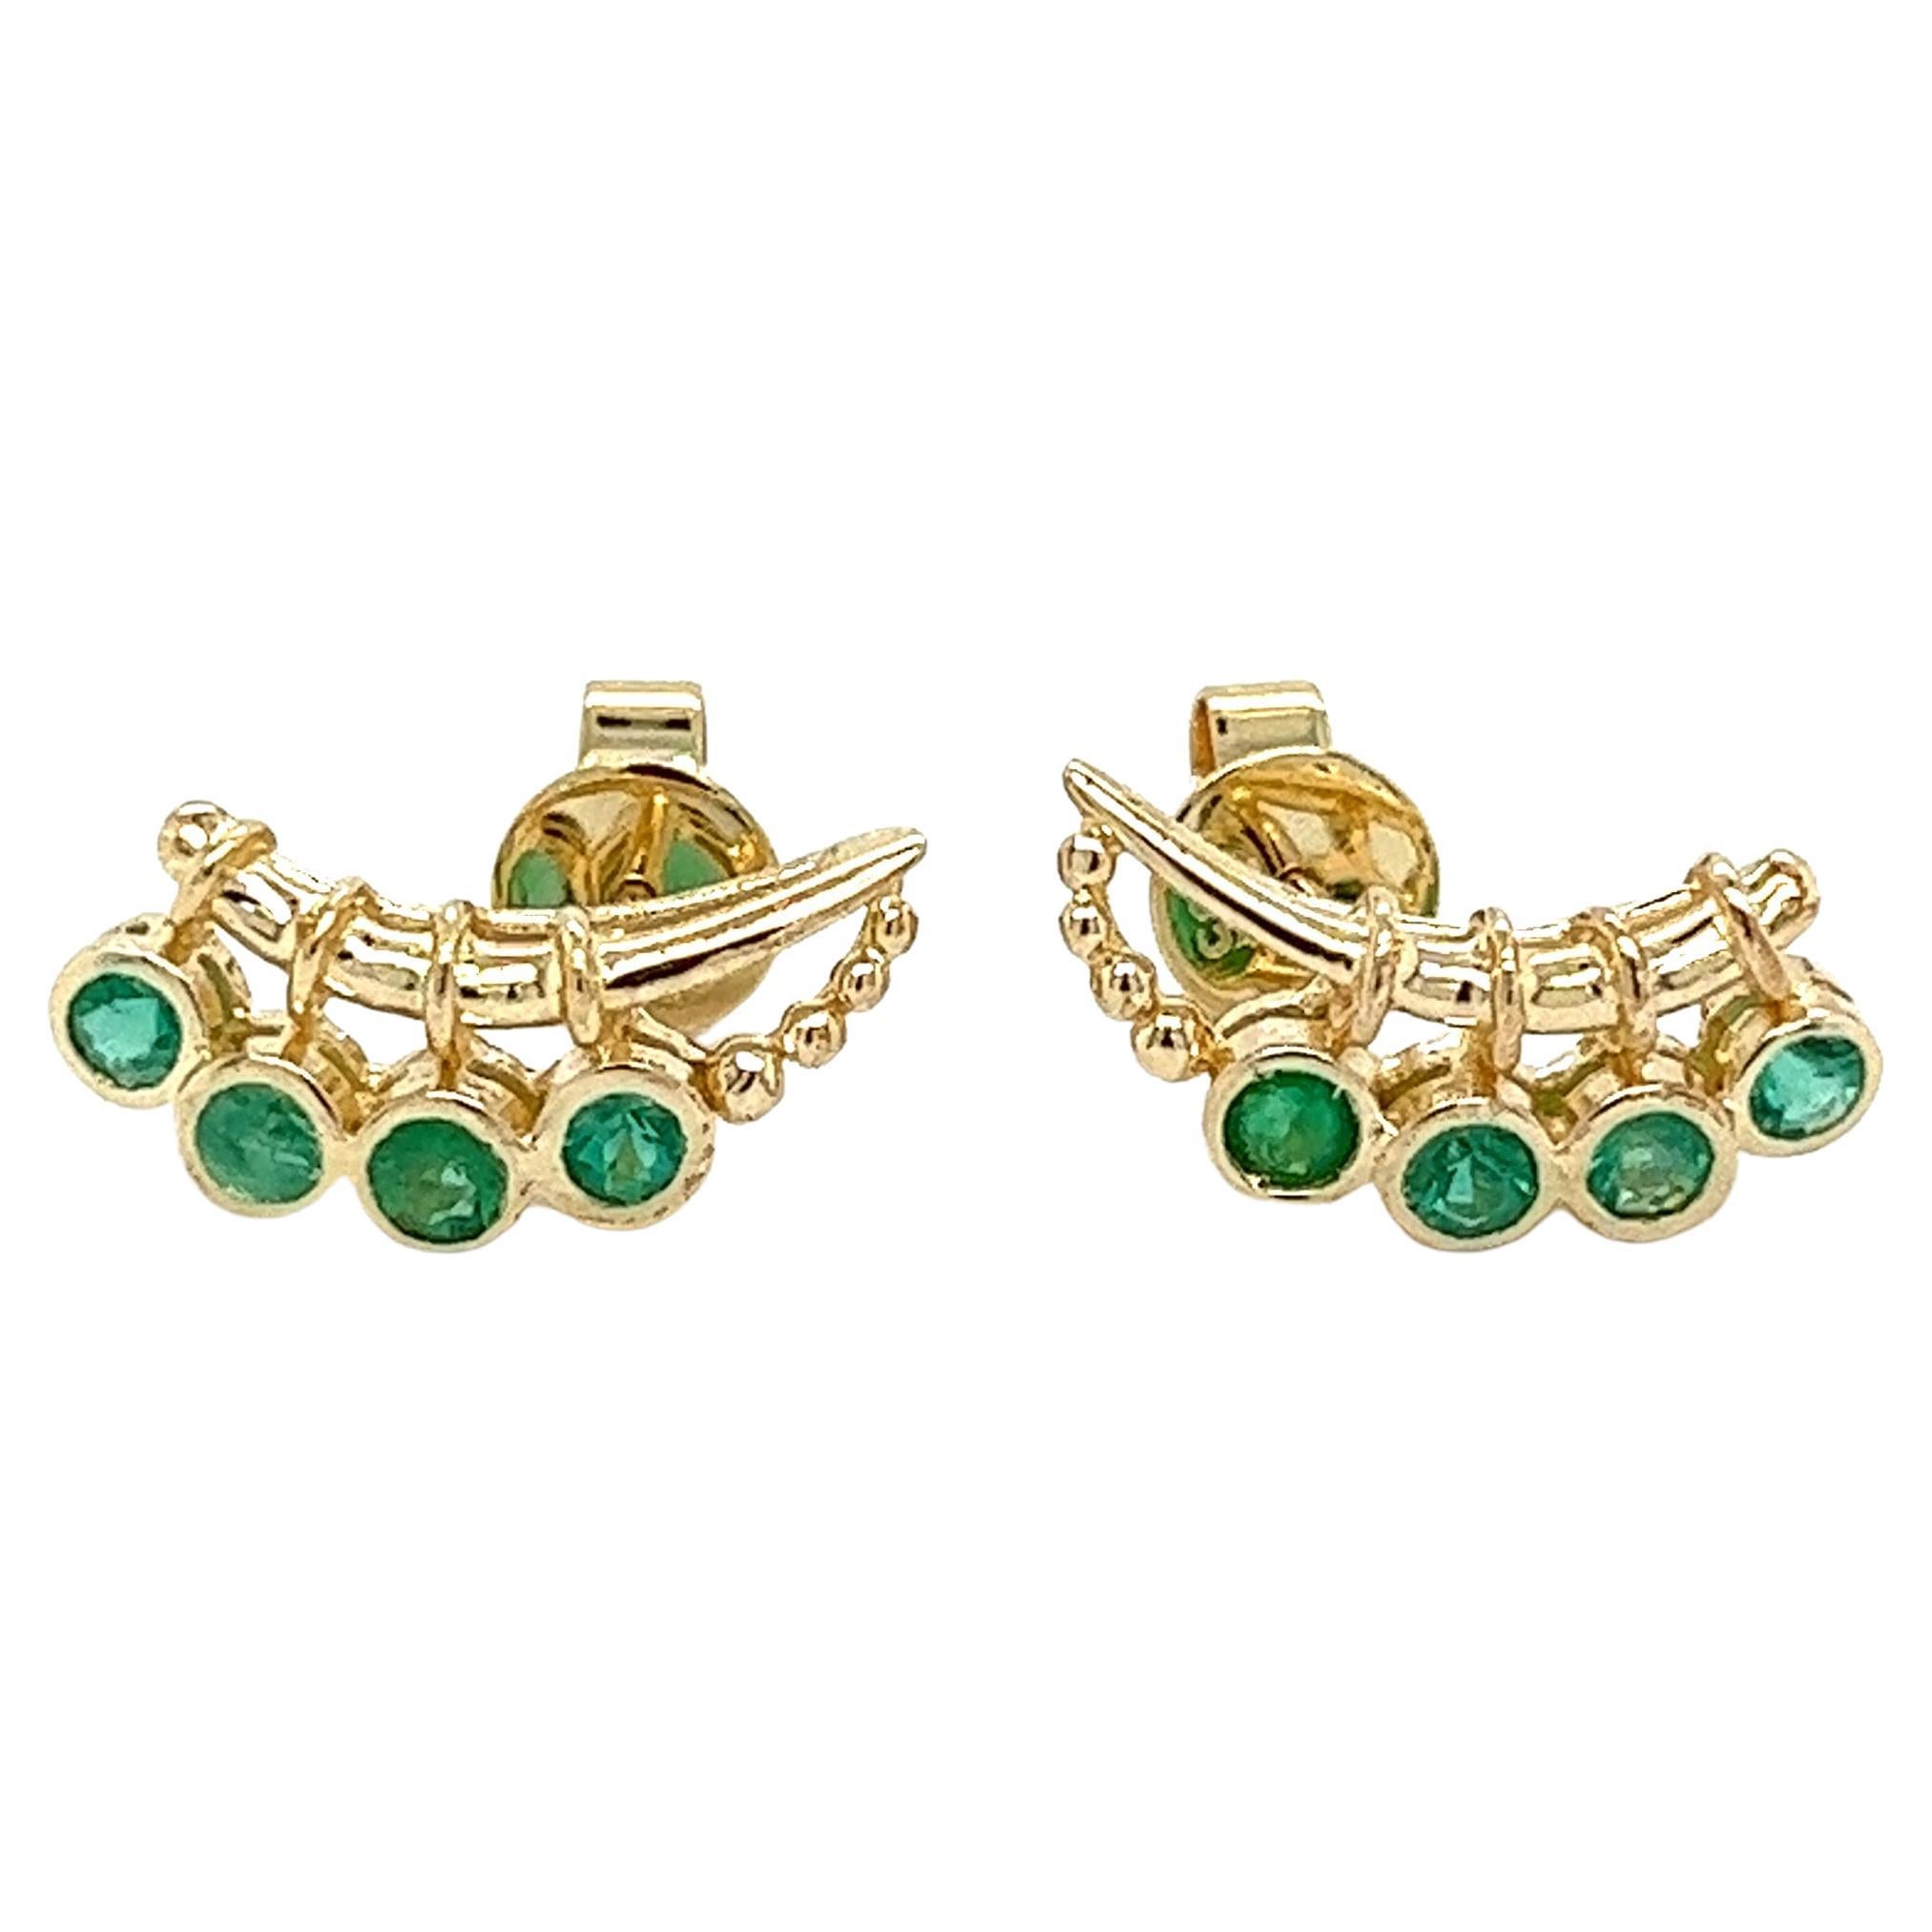 Round Emerald Ear Climber Earrings in 14K Gold